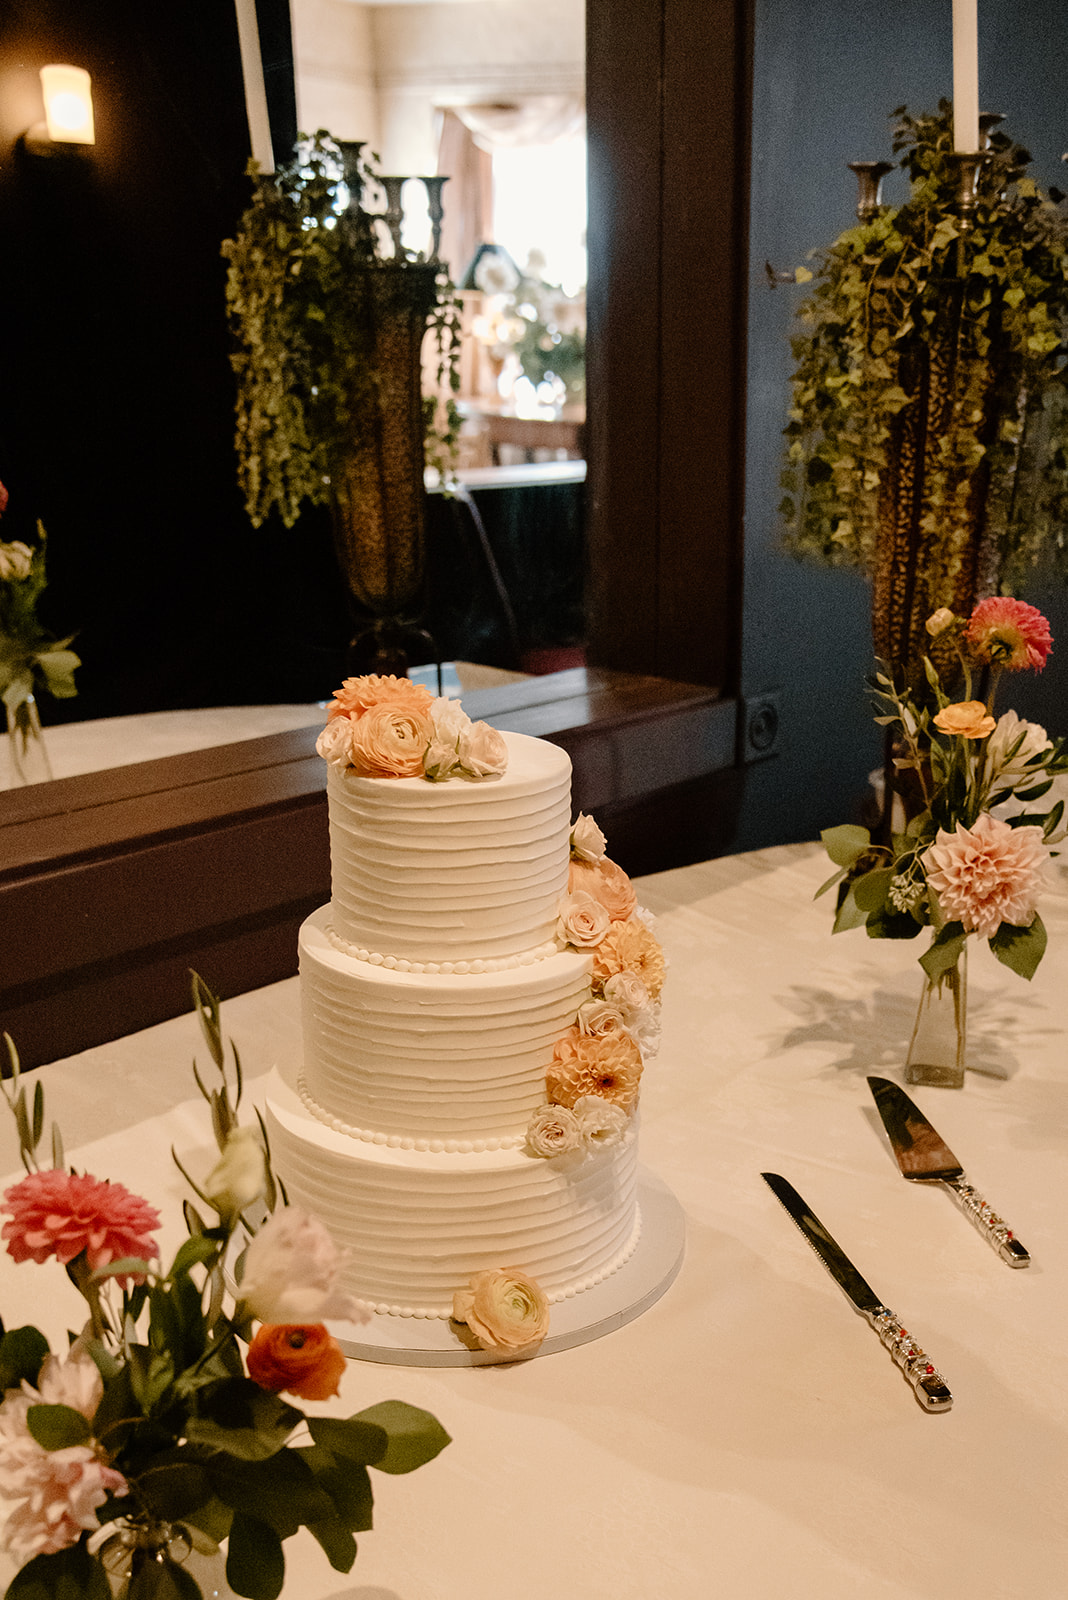 Sydney Jai Photography - Petaluma wedding, wedding details, wedding reception decor, wedding cake inspiration